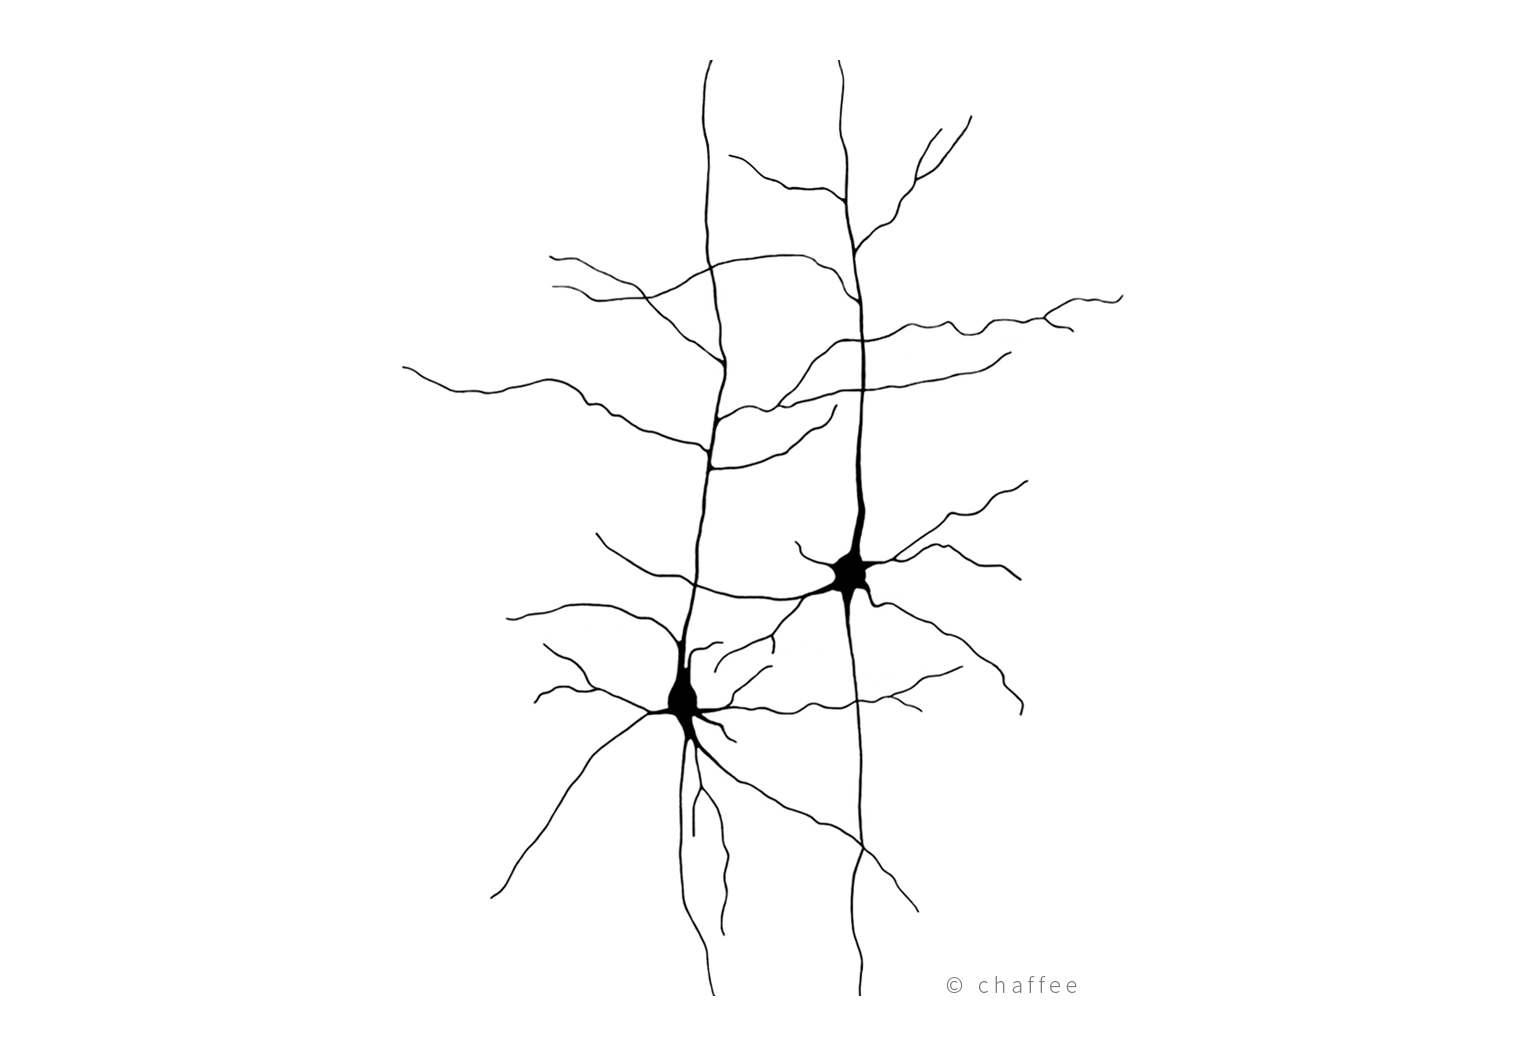 18_chaffee-neuron-1c.png